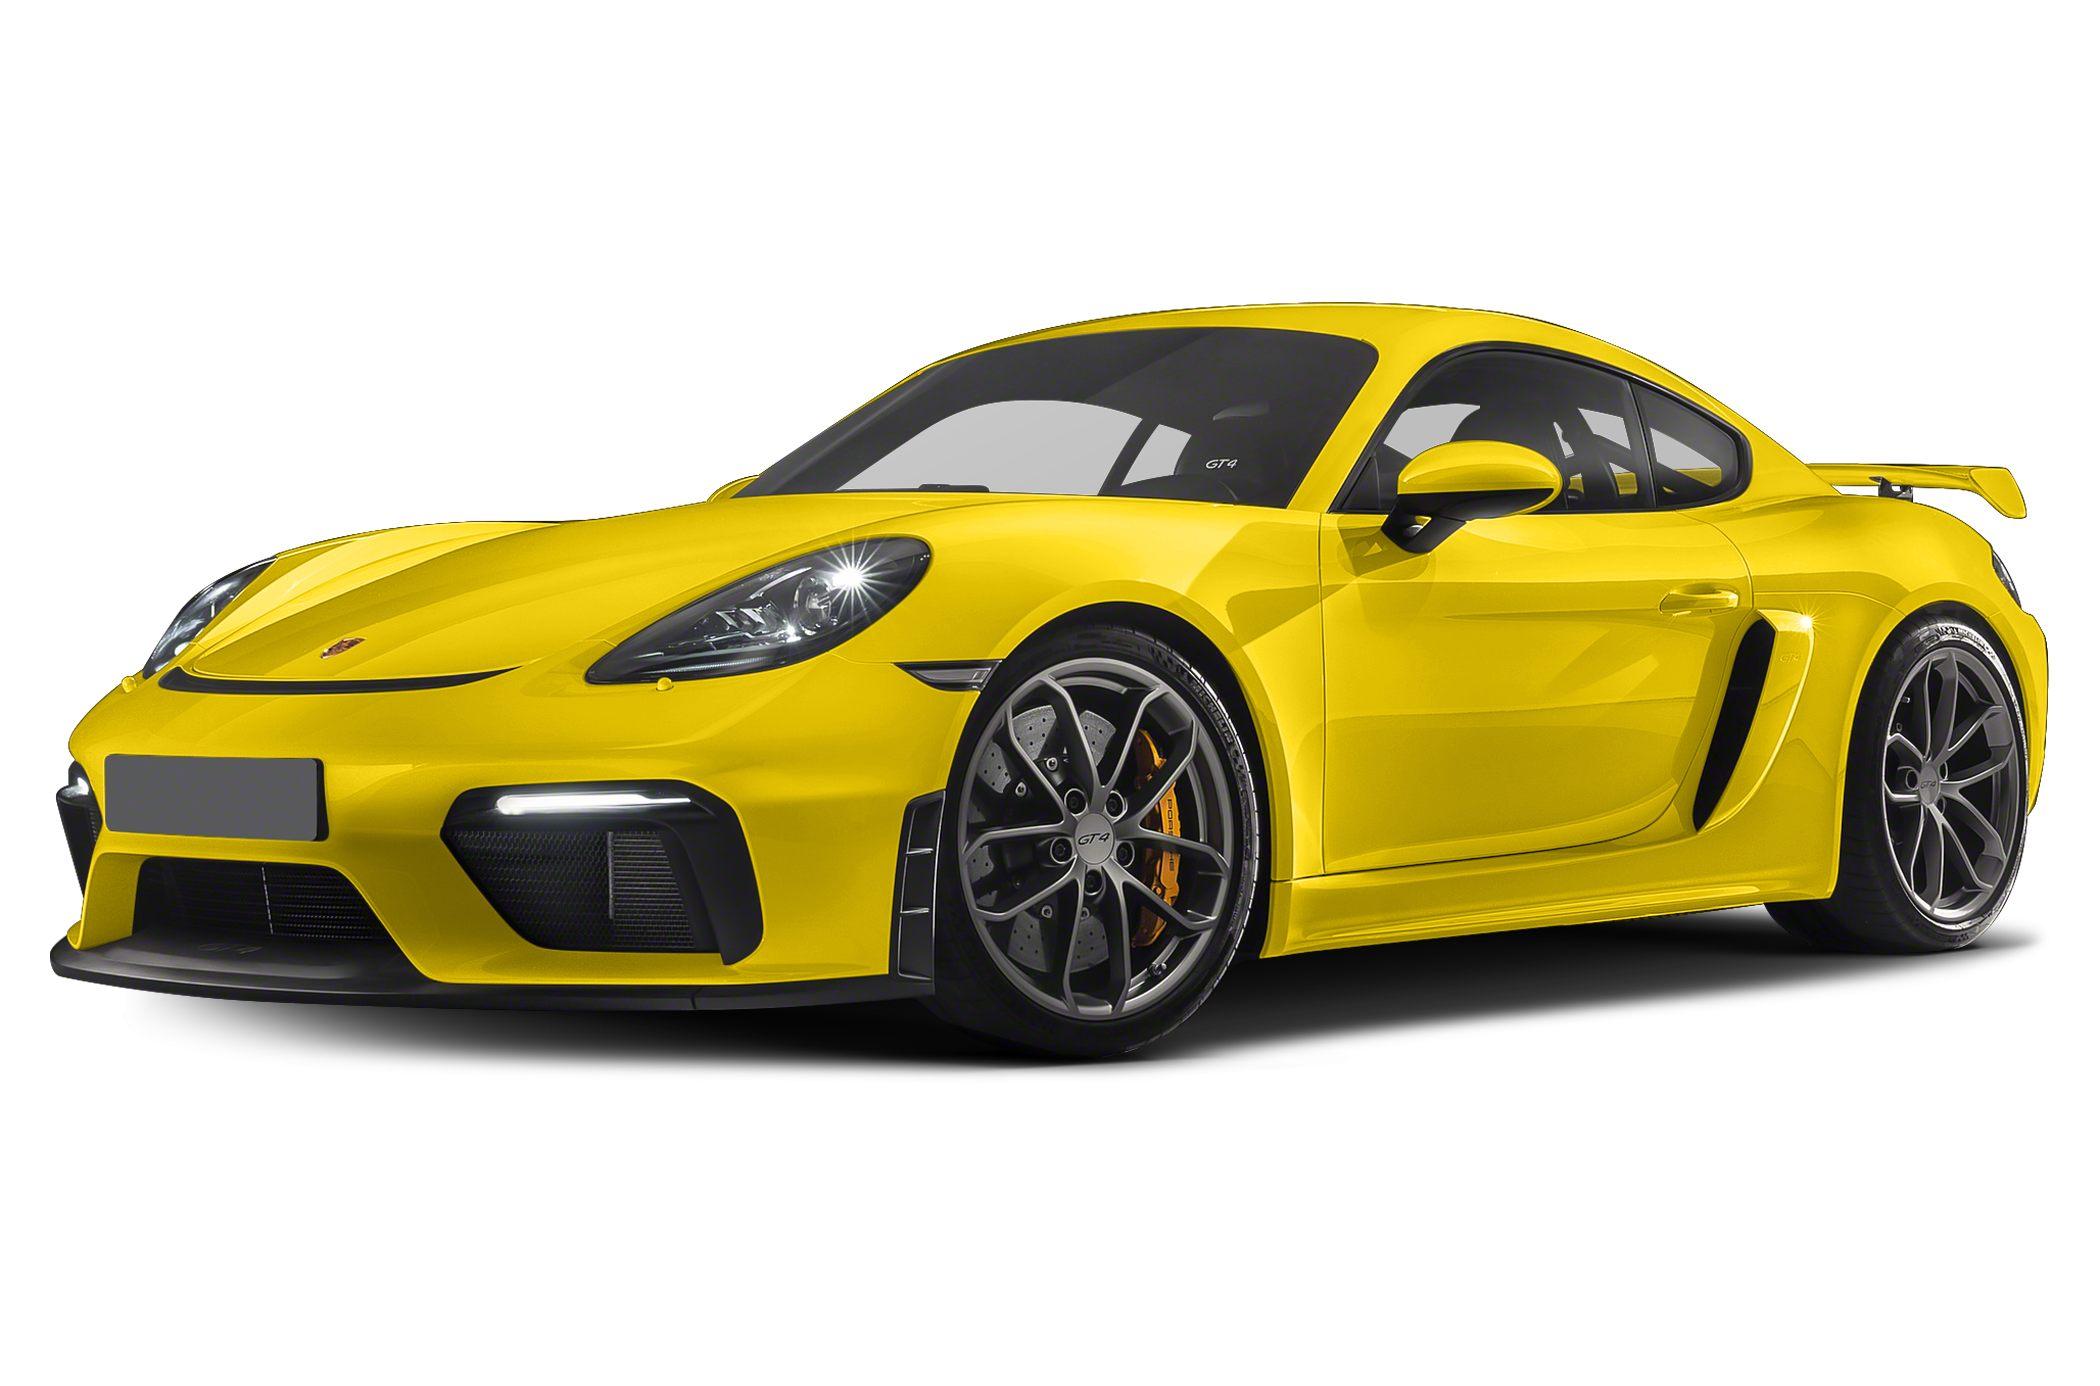 Porsche Cayman GT4 Sports Cup Edition celebrates in multi